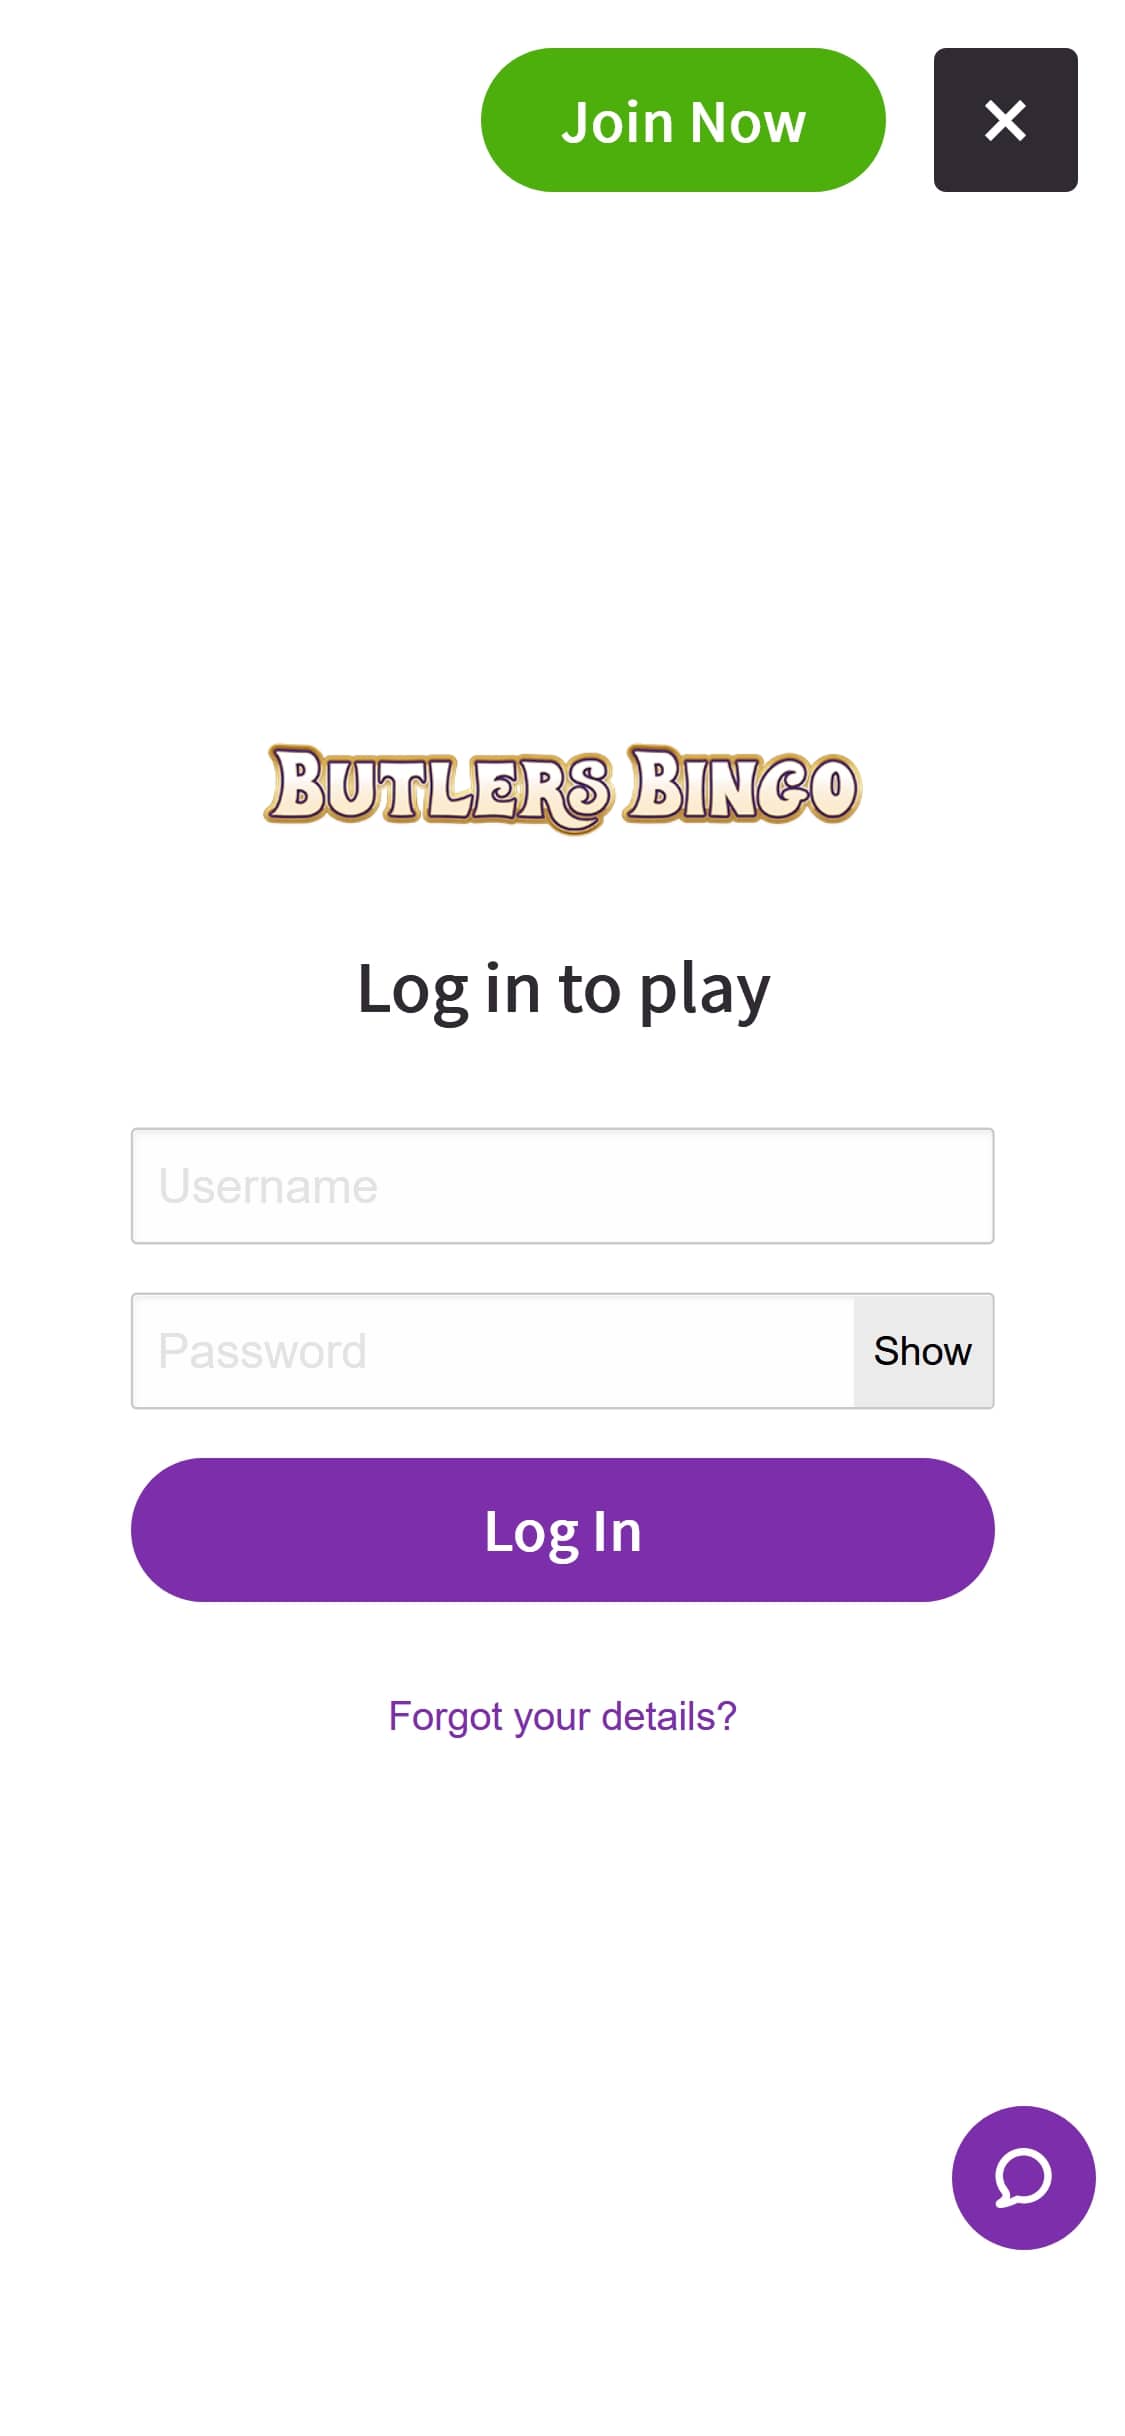 Butlers Bingo Casino Mobile Login Review